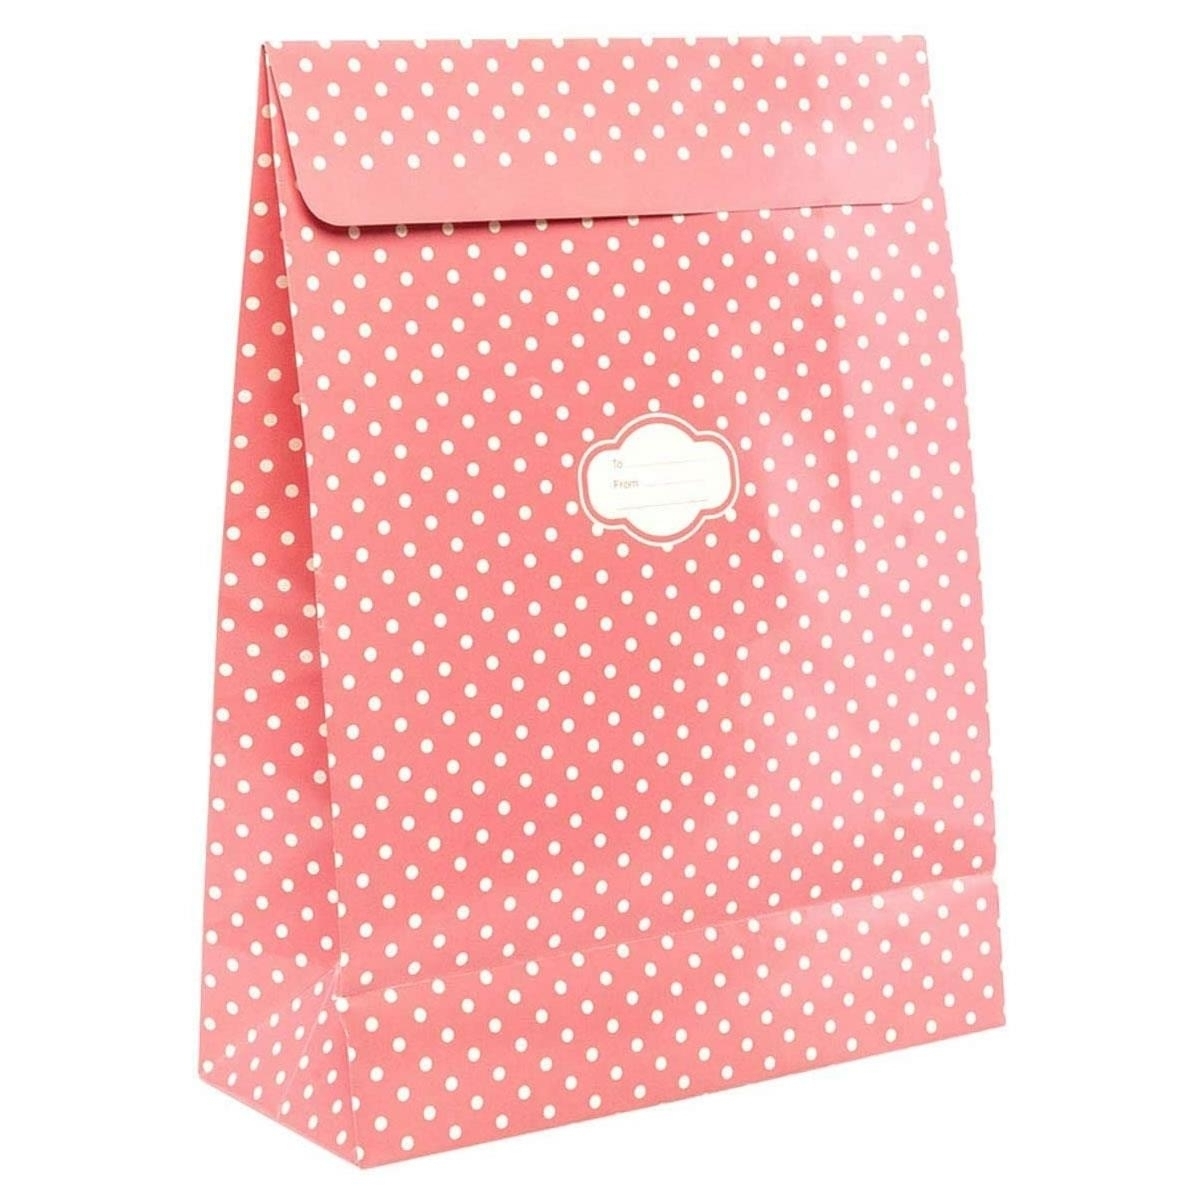 Pressie Pouch Peel & Seal Gift Bag Pink Polka Dots 12pk Small No-Wrap Present